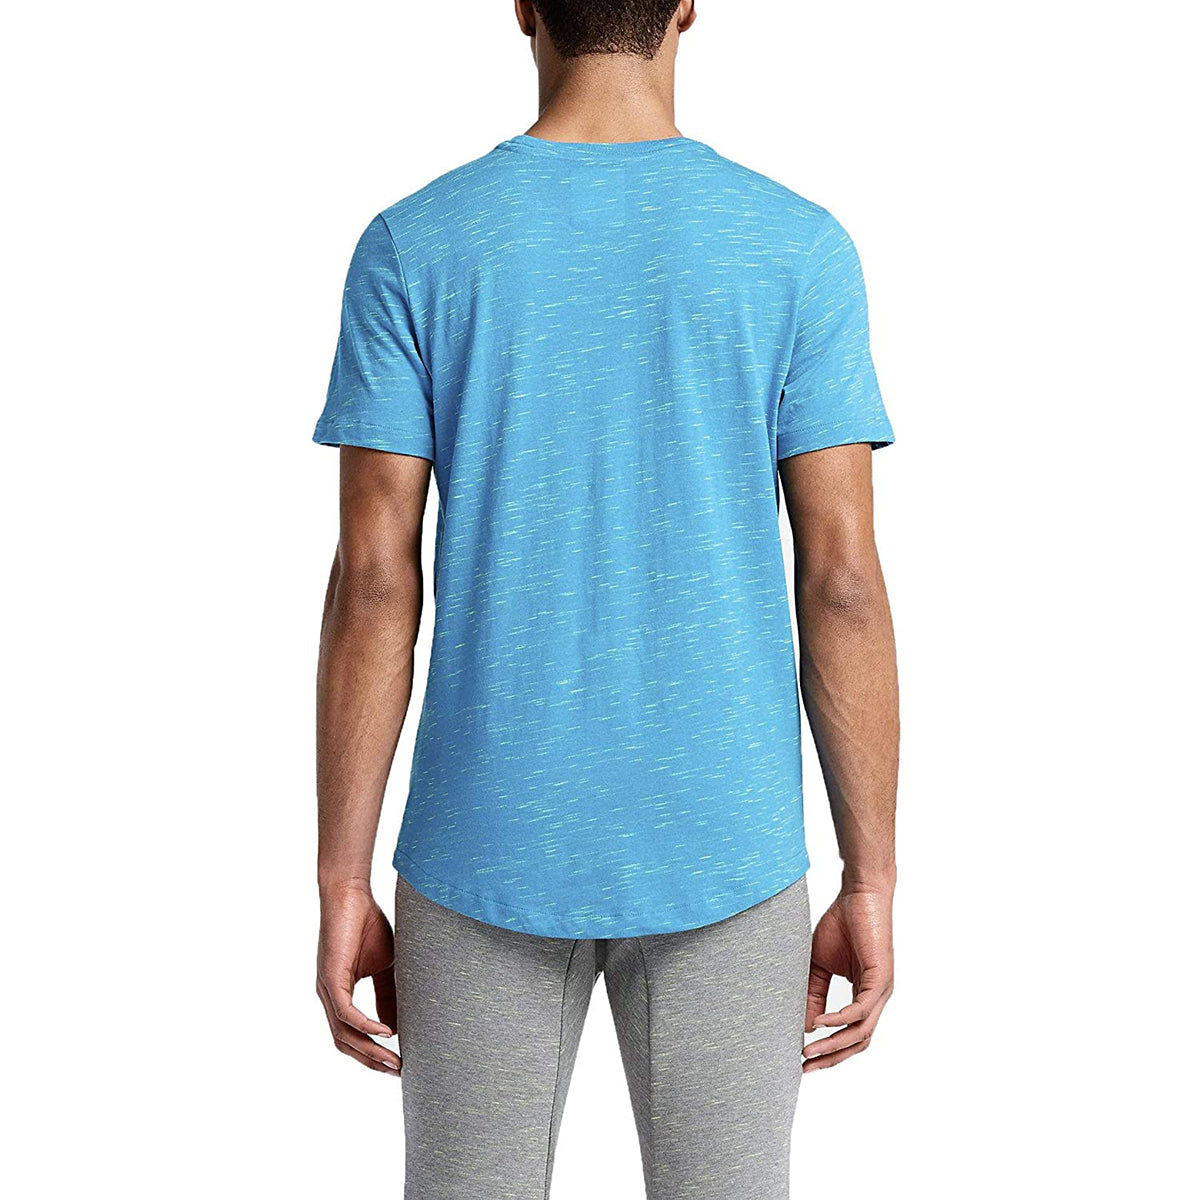 Nike Tech Bonded Pocket T-shir Mens Style : 641722